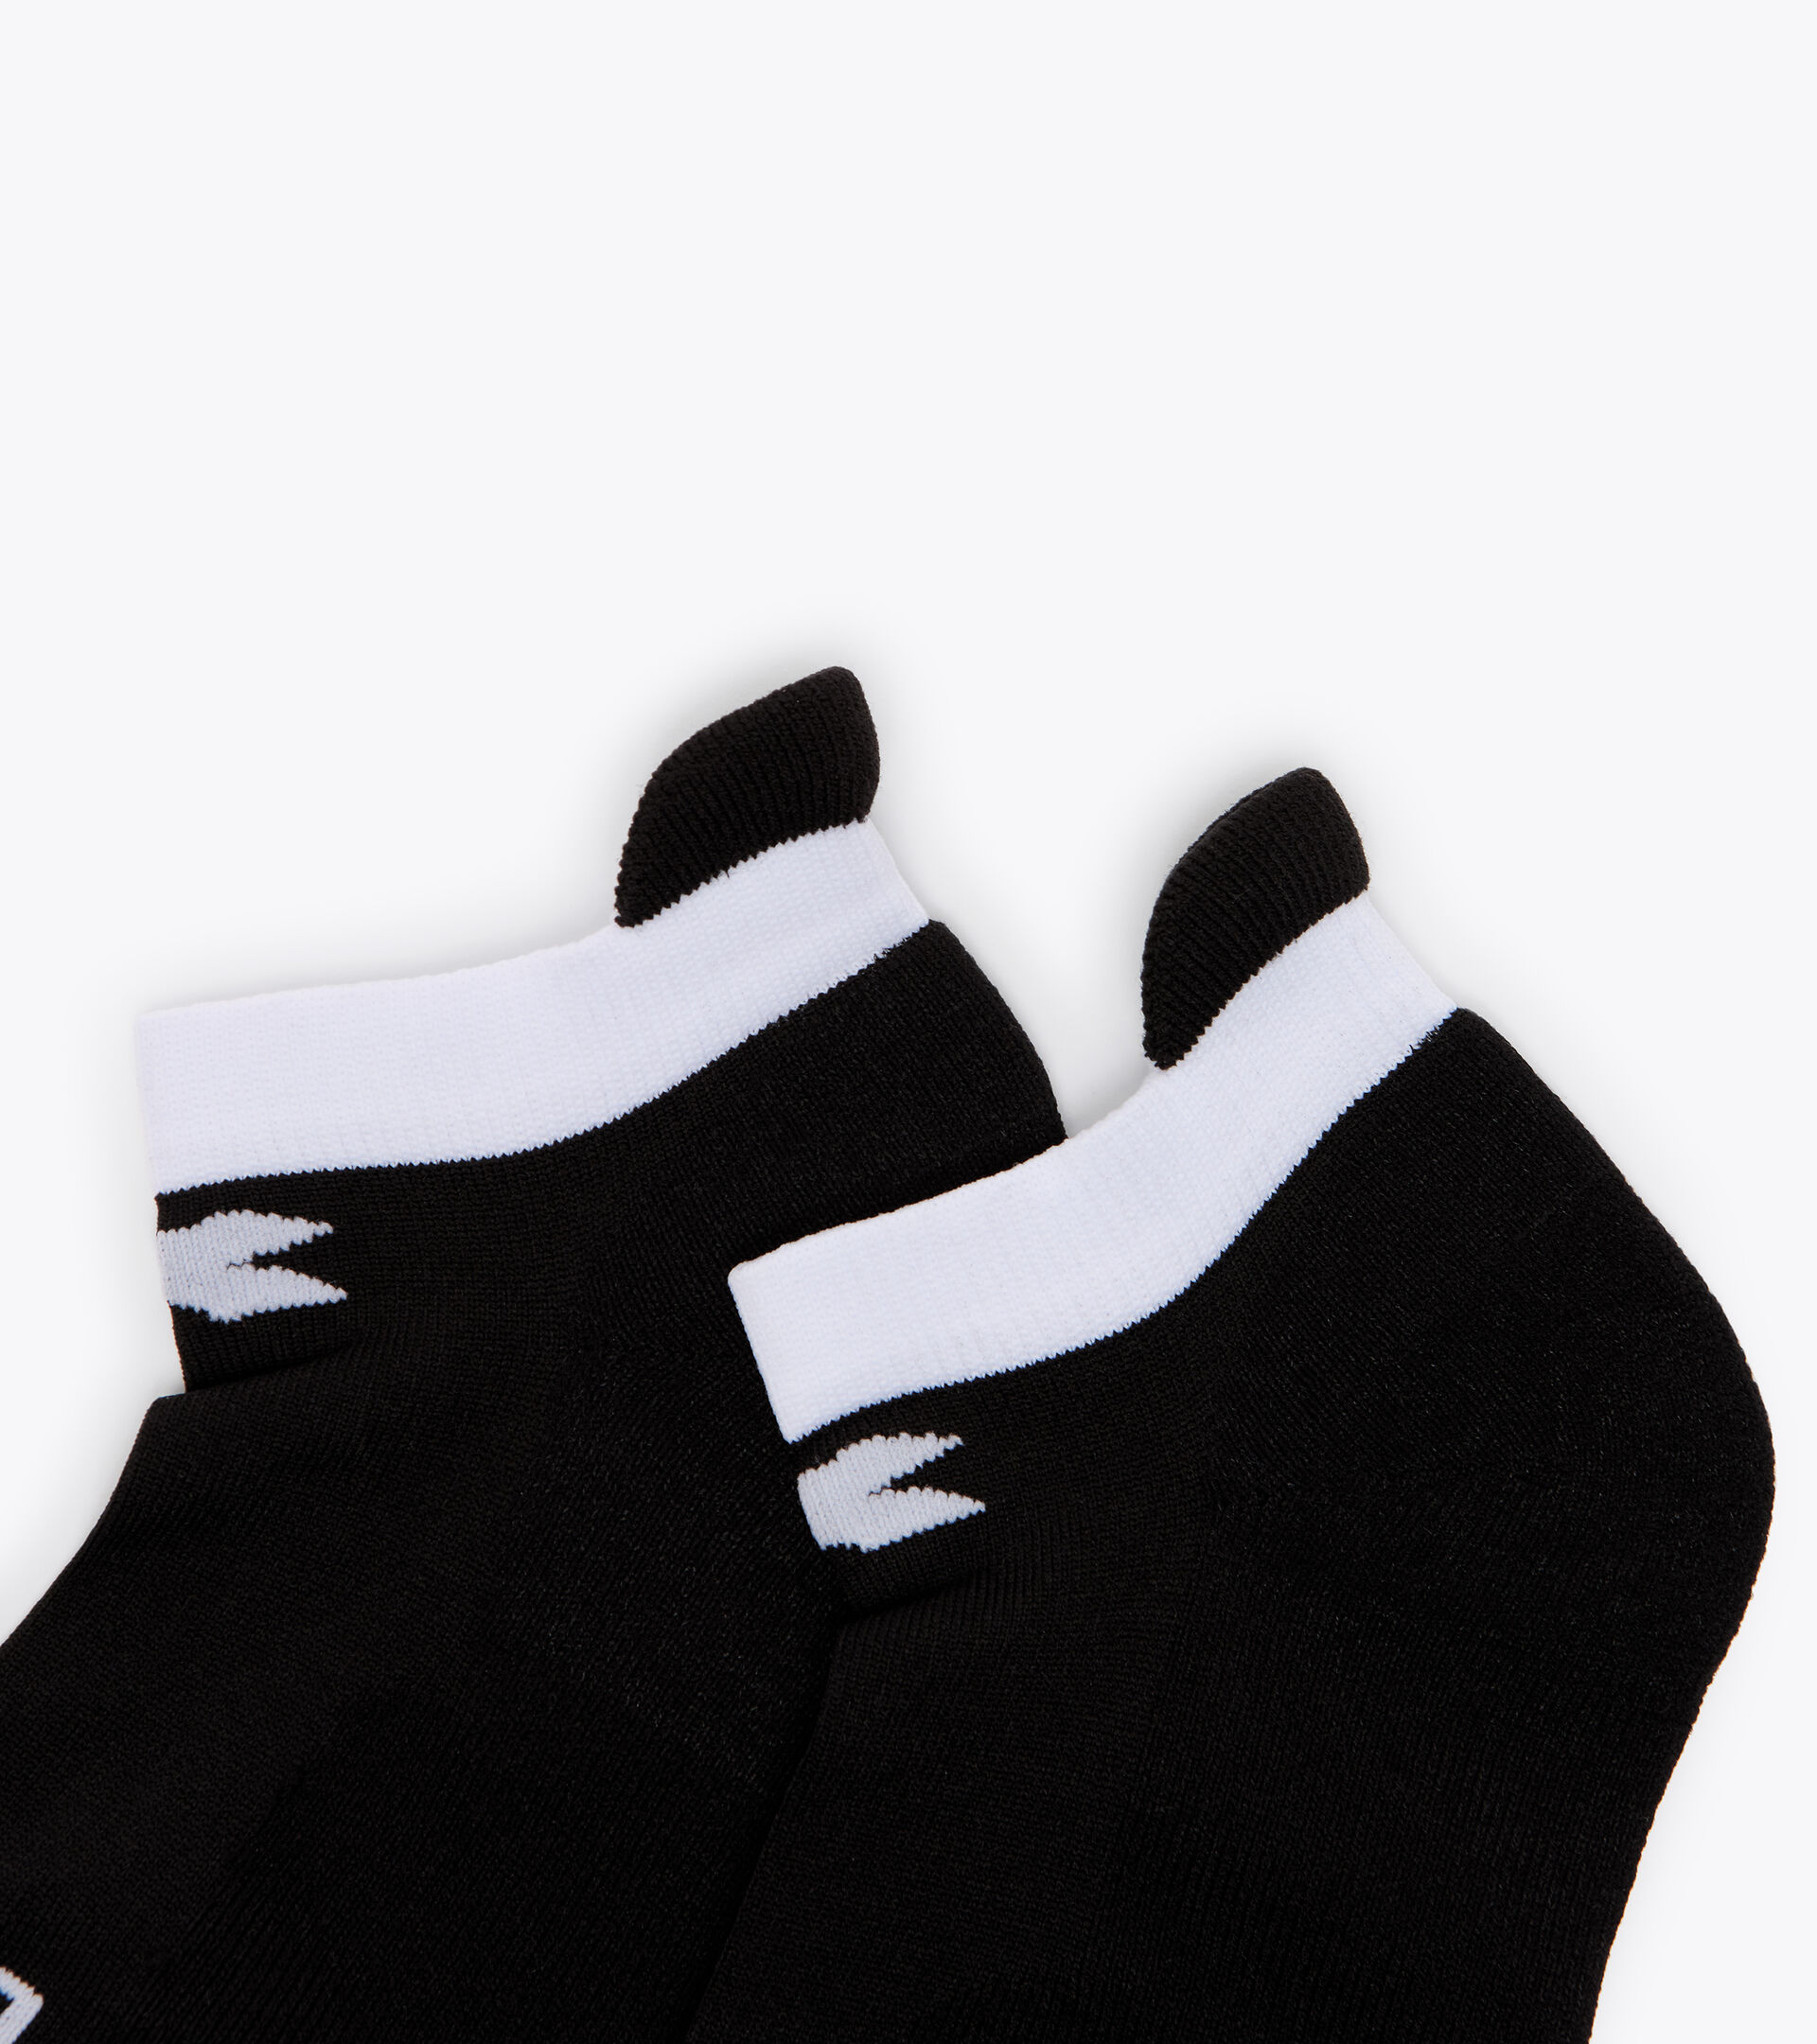 Chaussettes courtes - Femme L. SOCKS BLACK/OPTICAL WHITE - Diadora